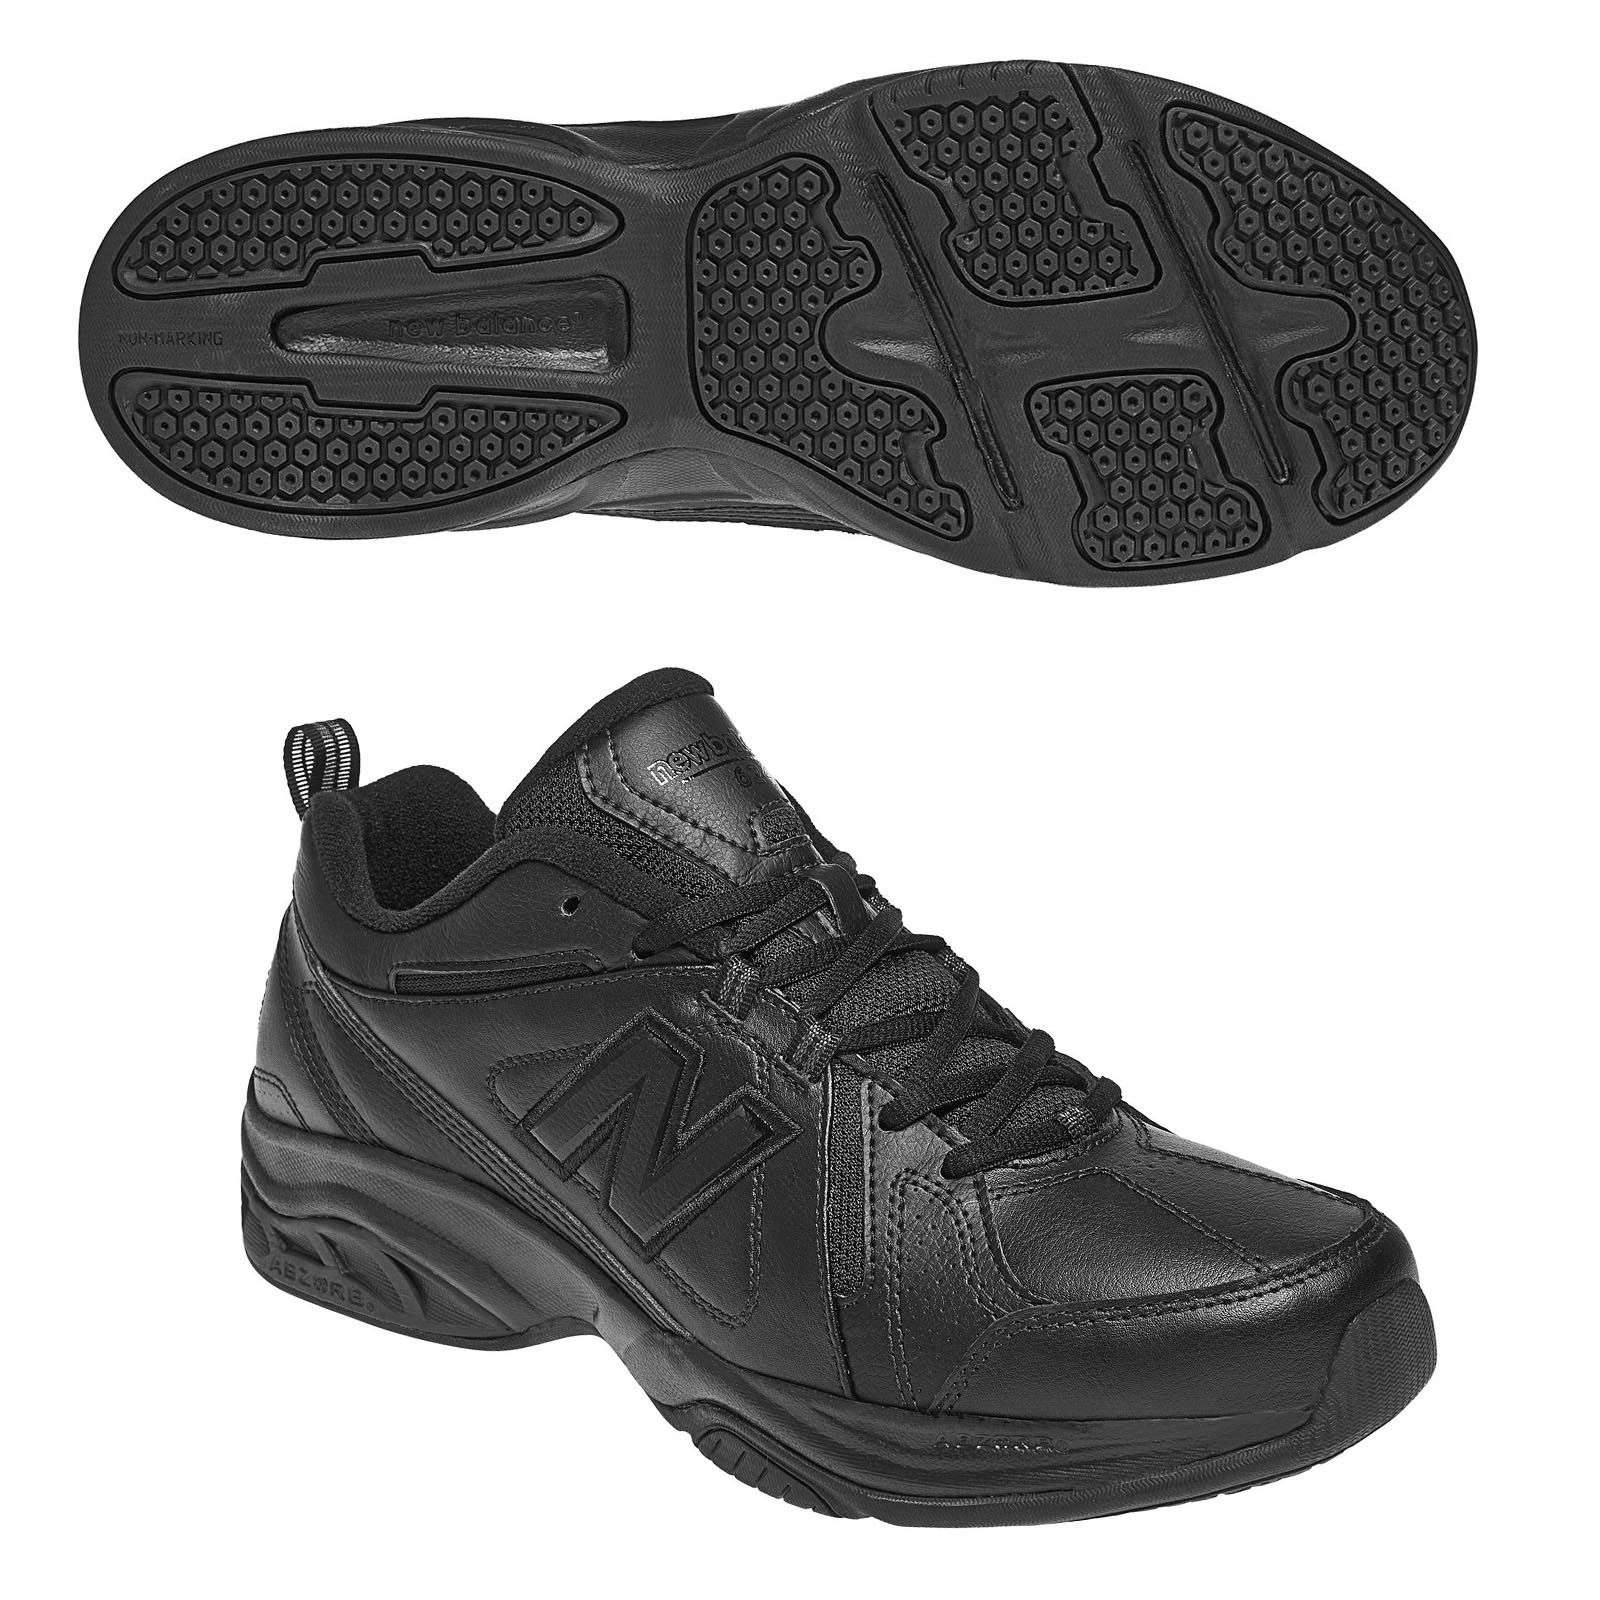 New Balance MX624 Mens Cross Training Shoes